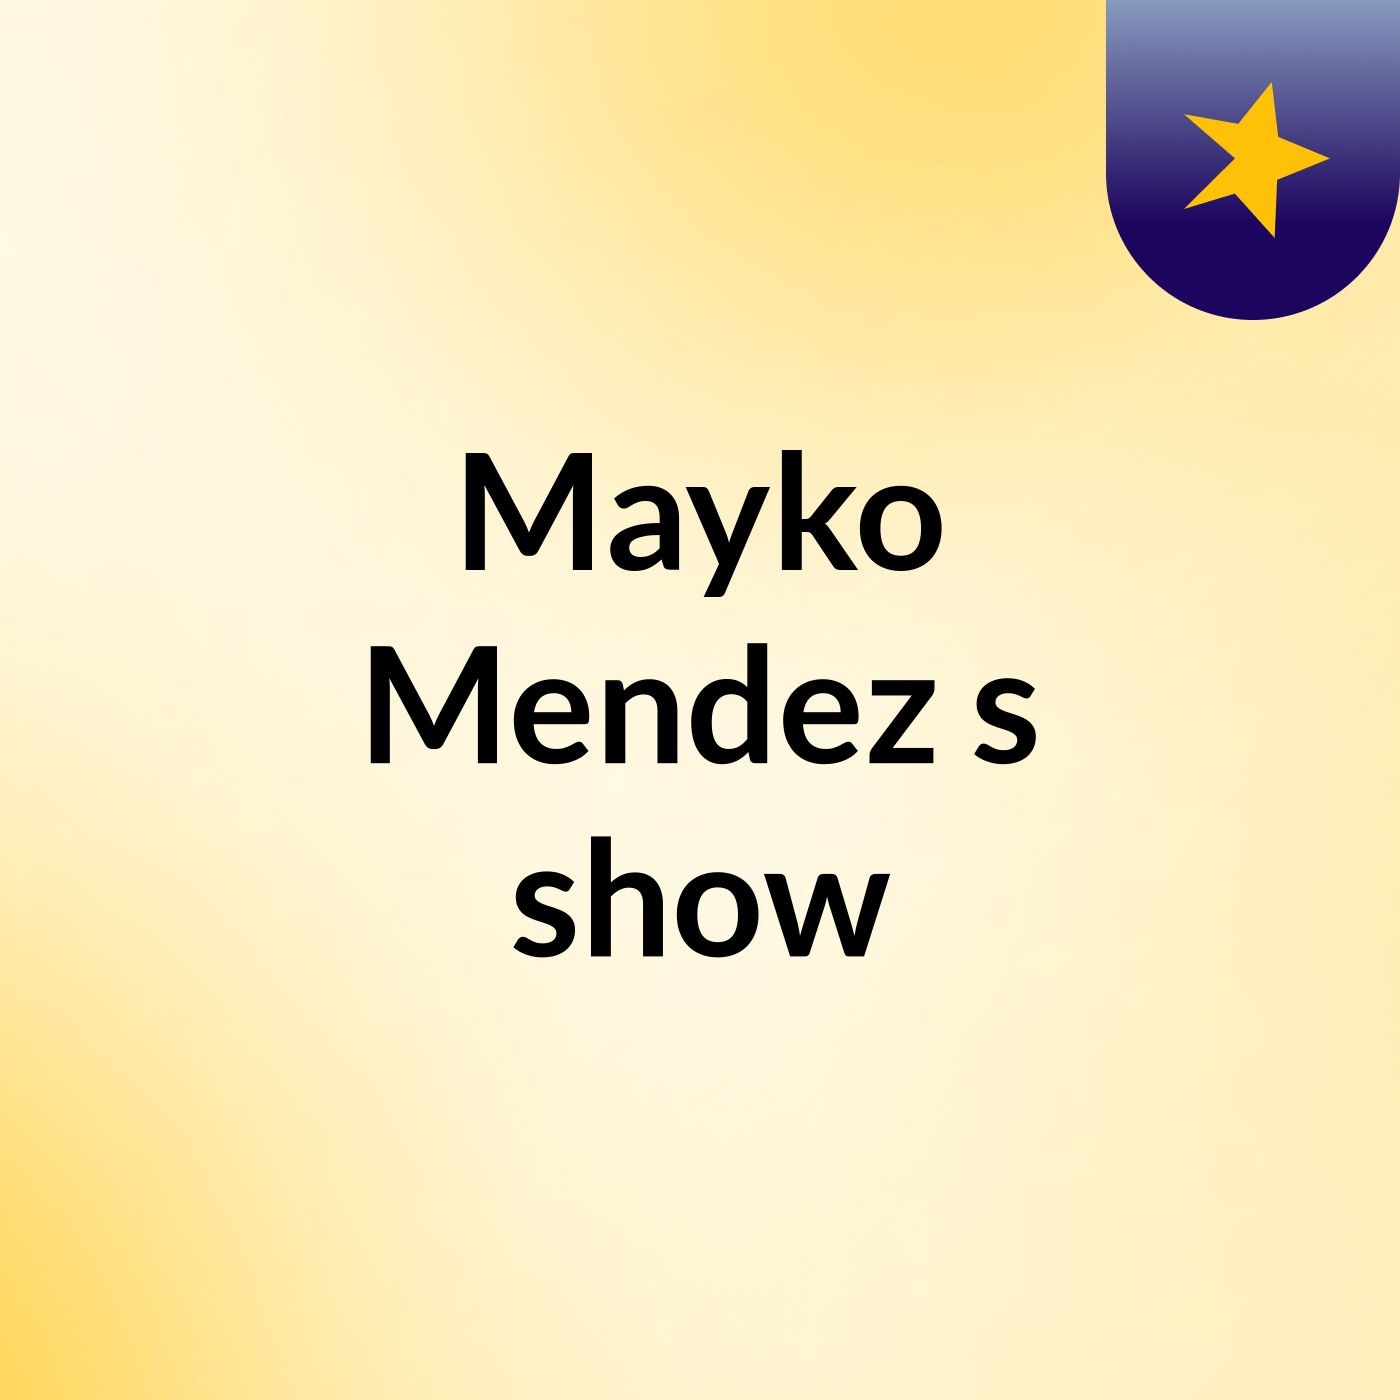 Mayko Mendez's show